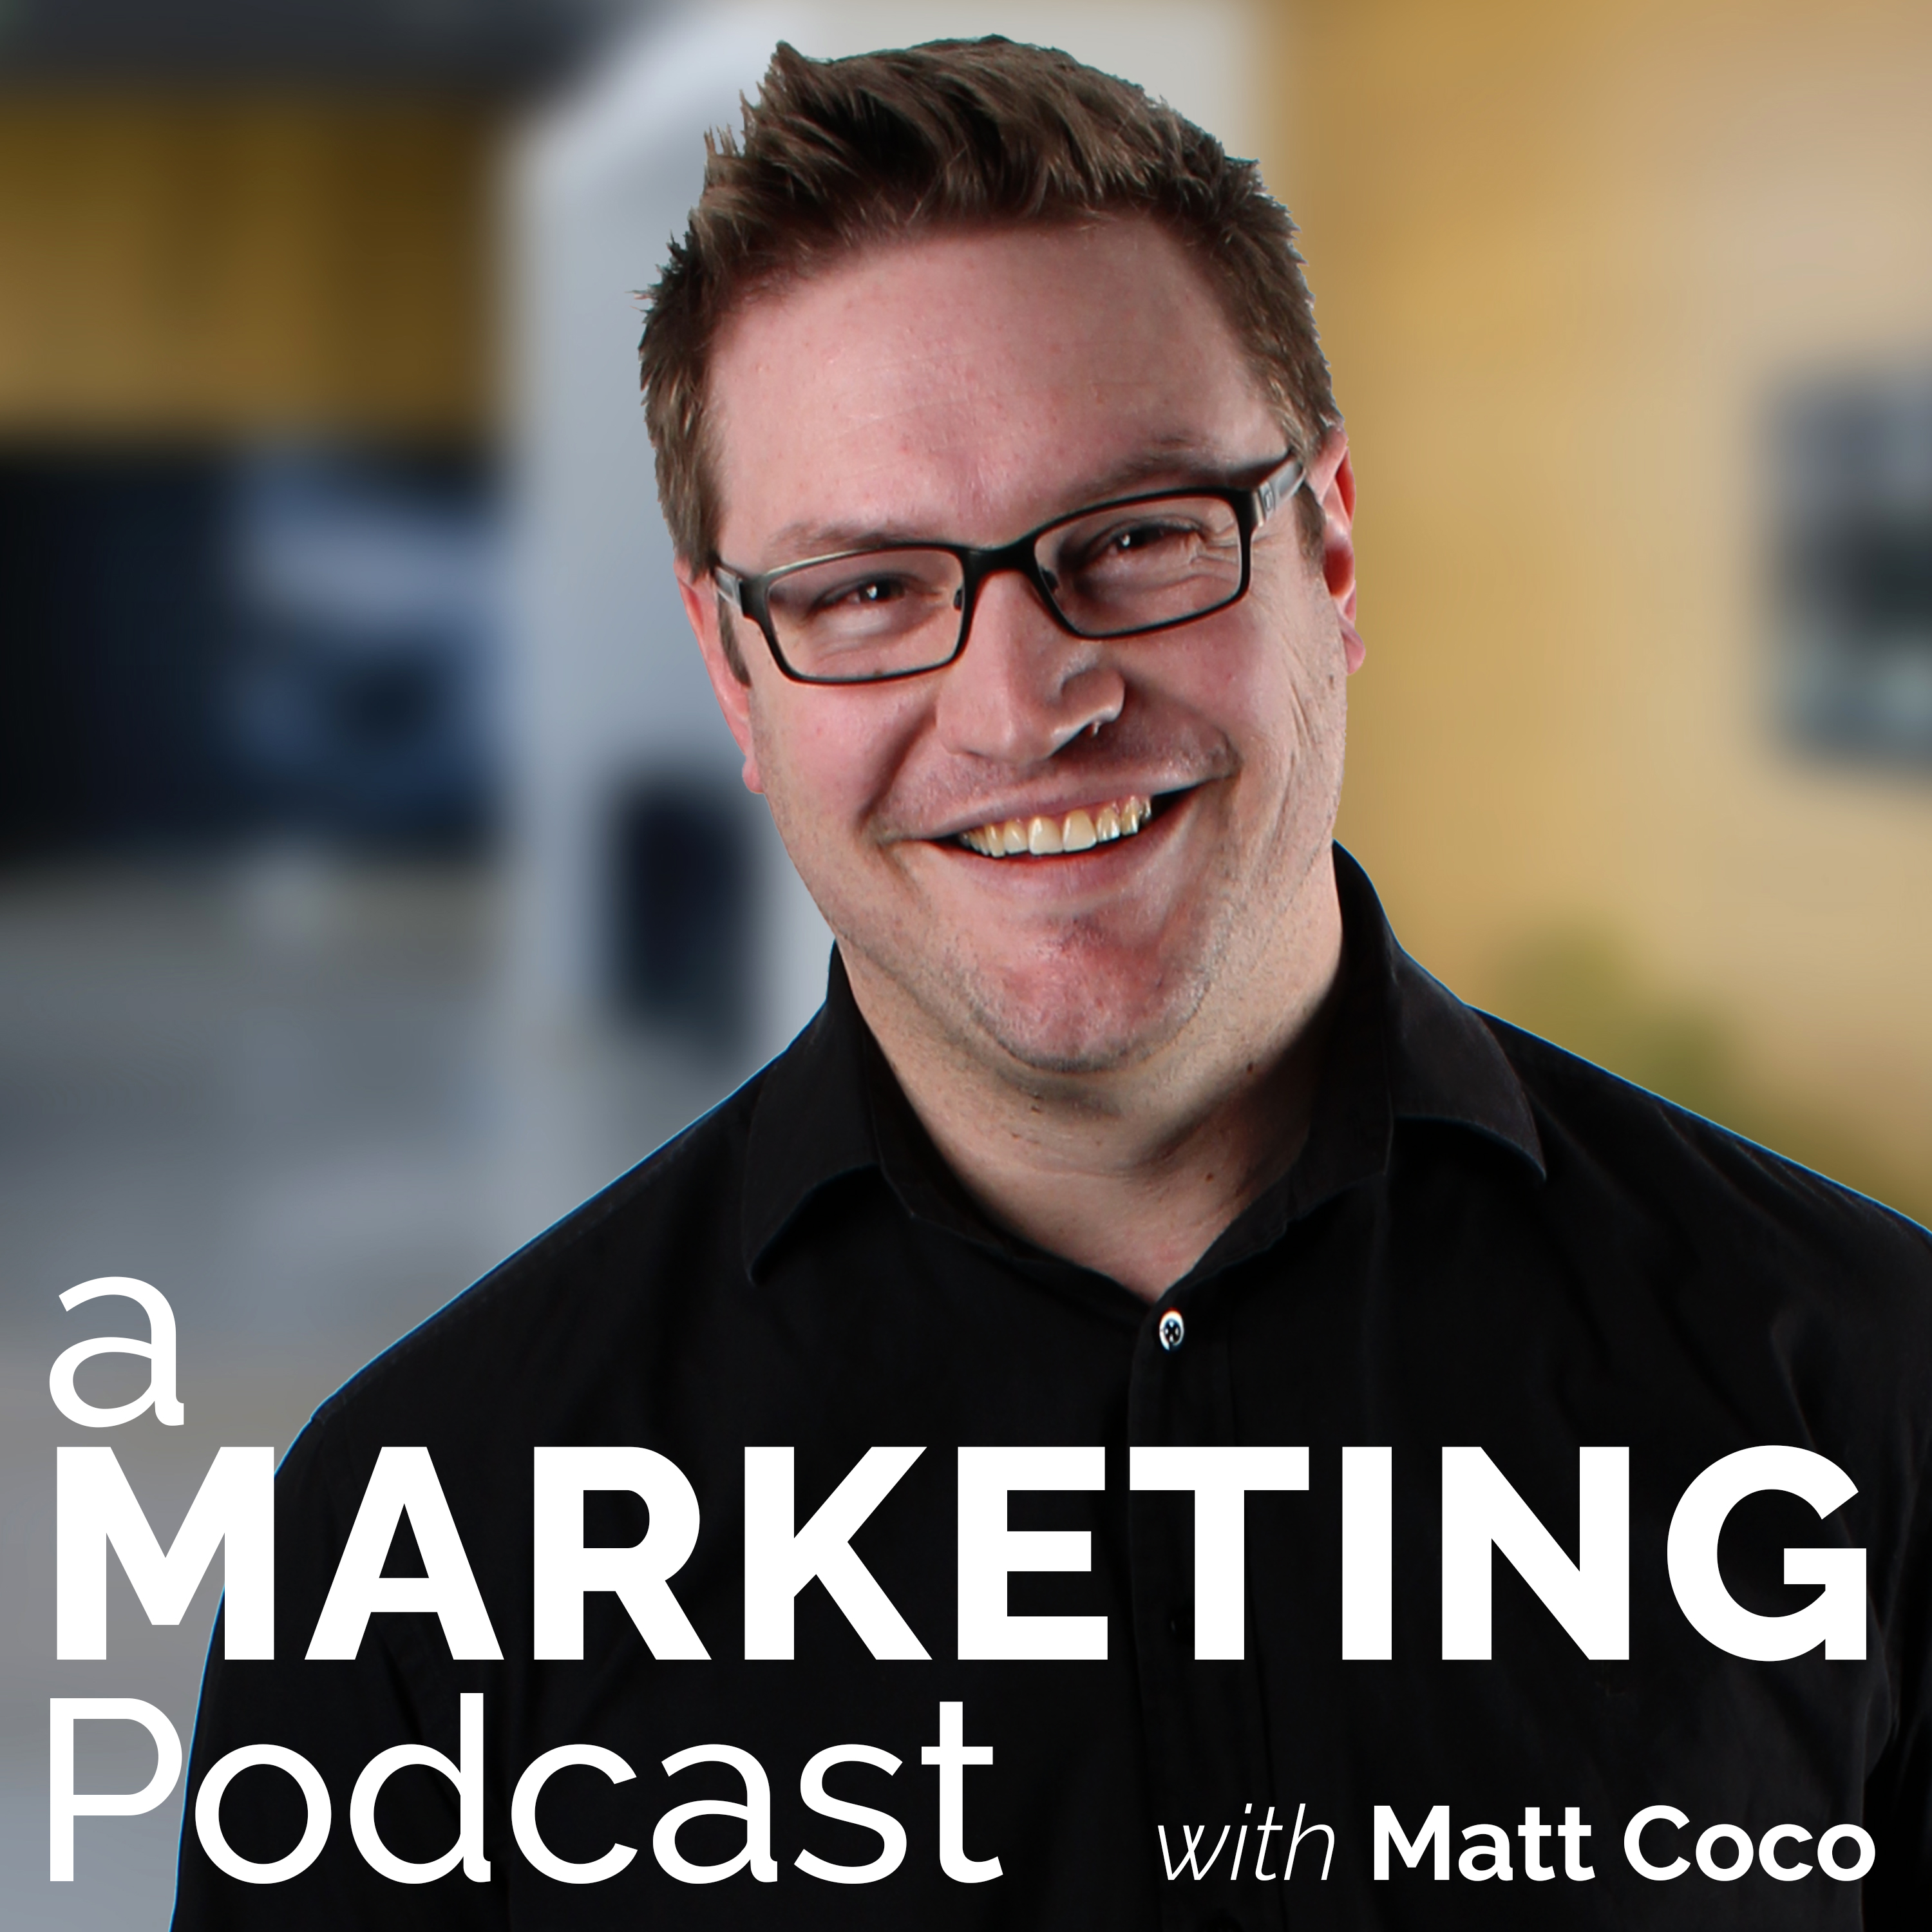 A Marketing Podcast